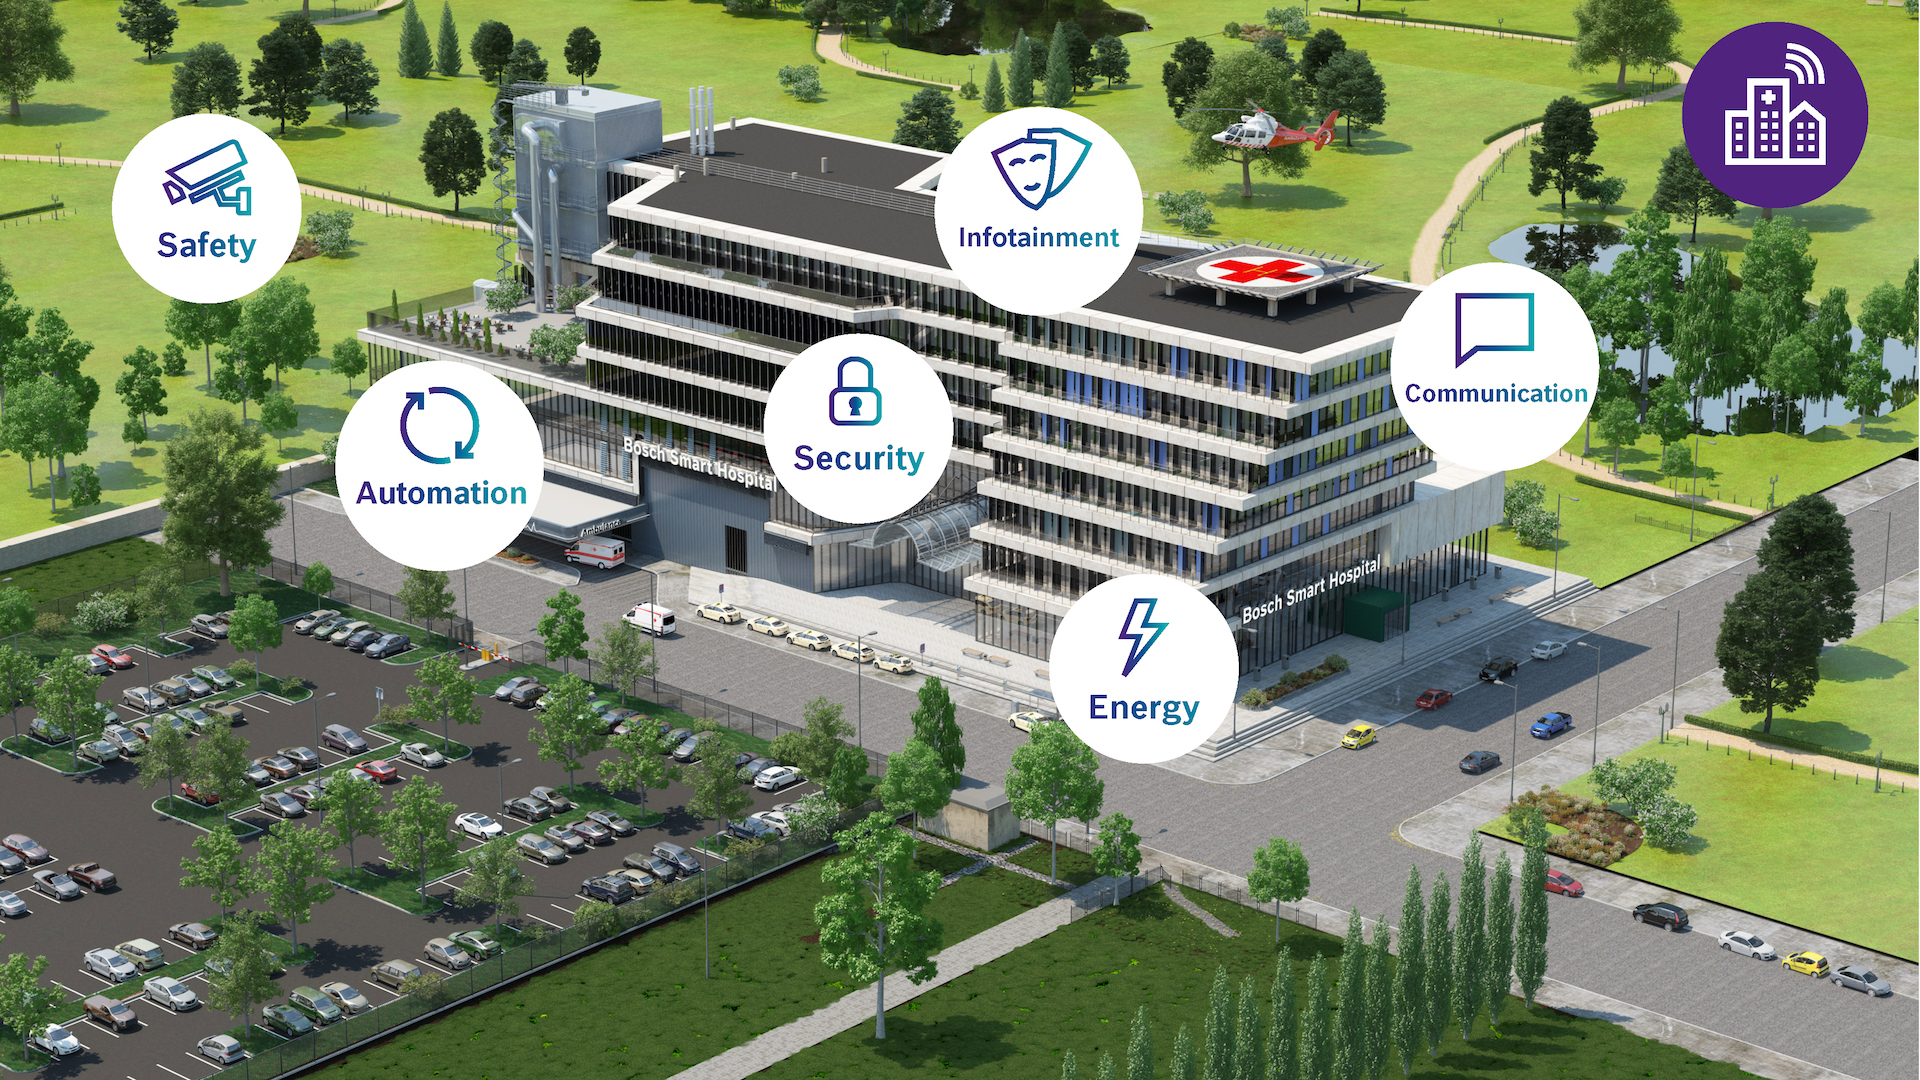 Bosch is making hospitals smart